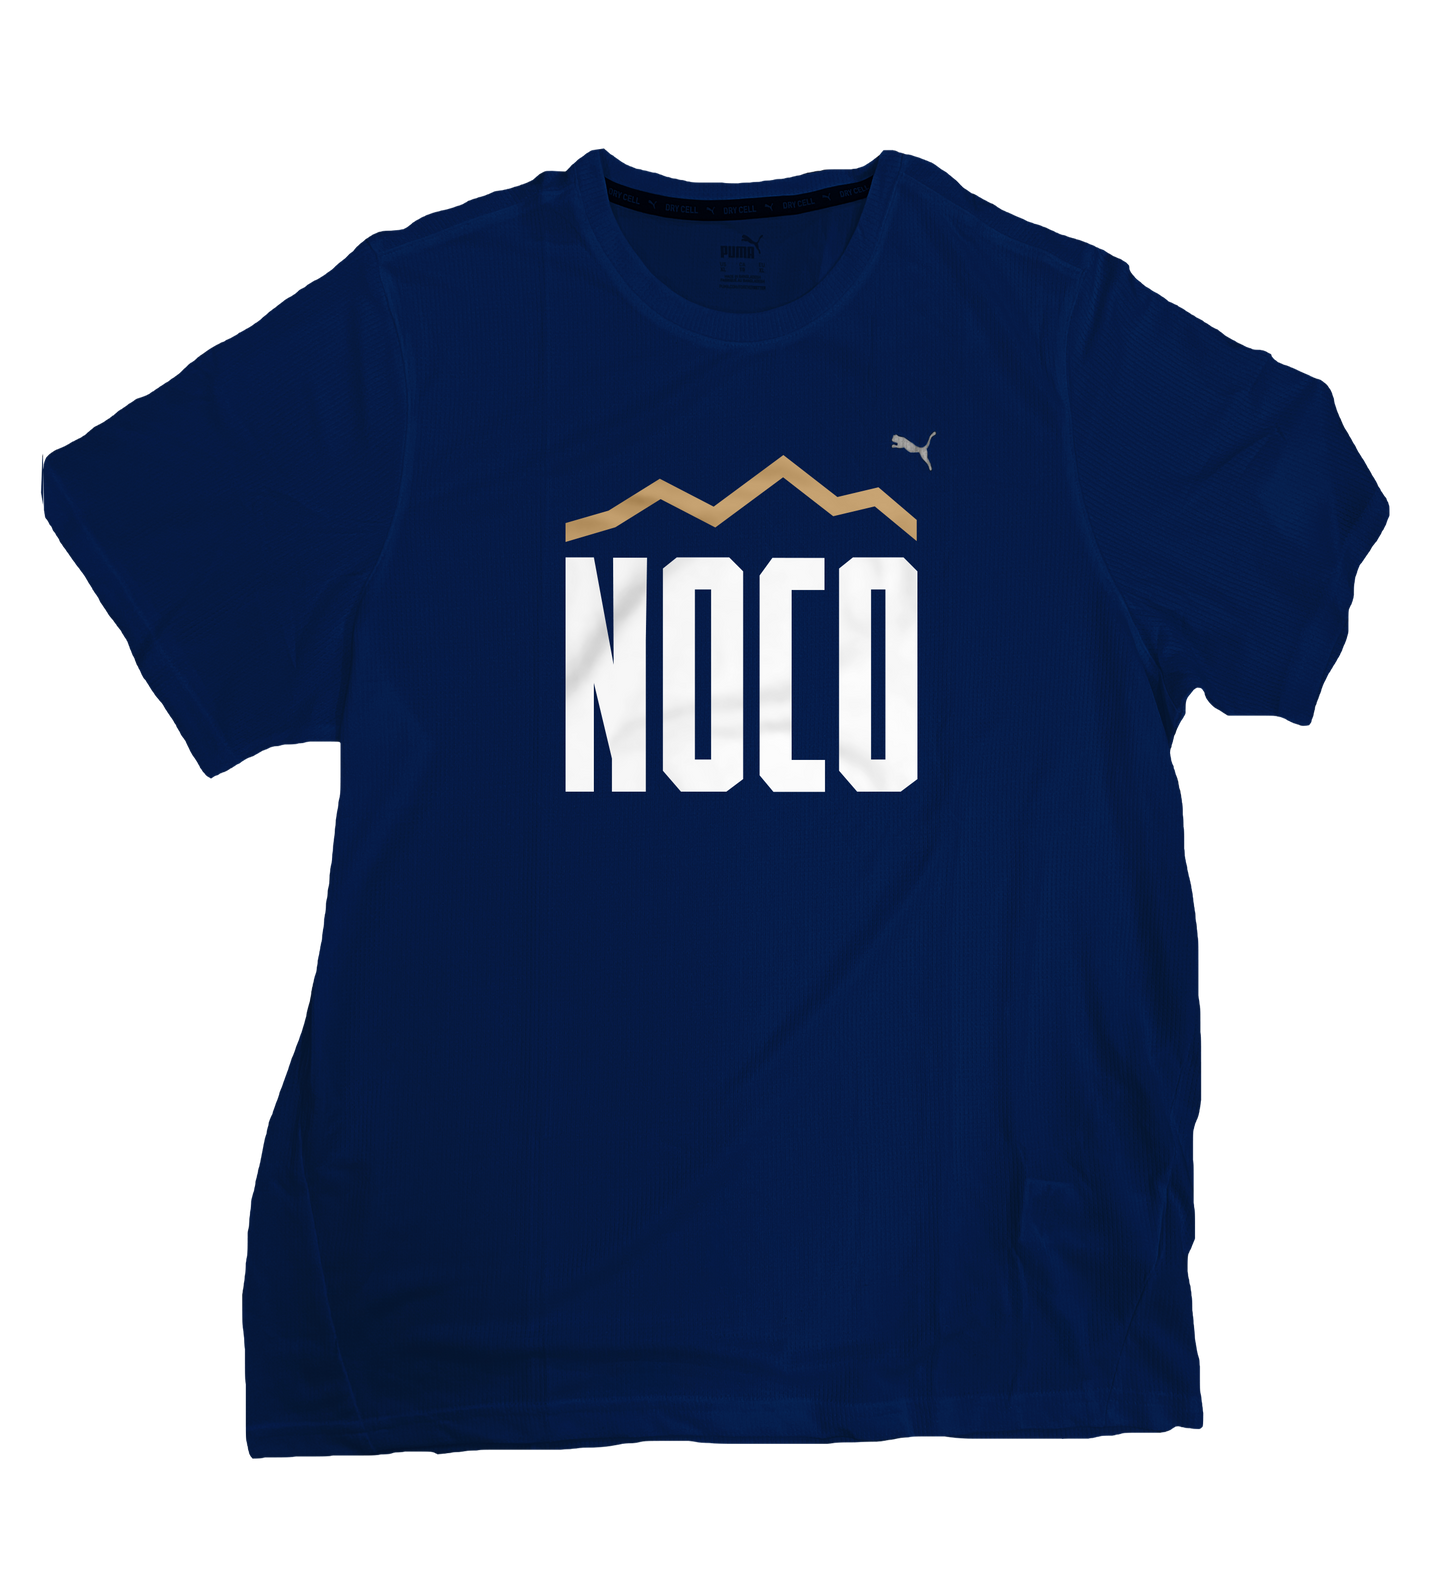 PUMA Navy Drycell NOCO T-Shirt